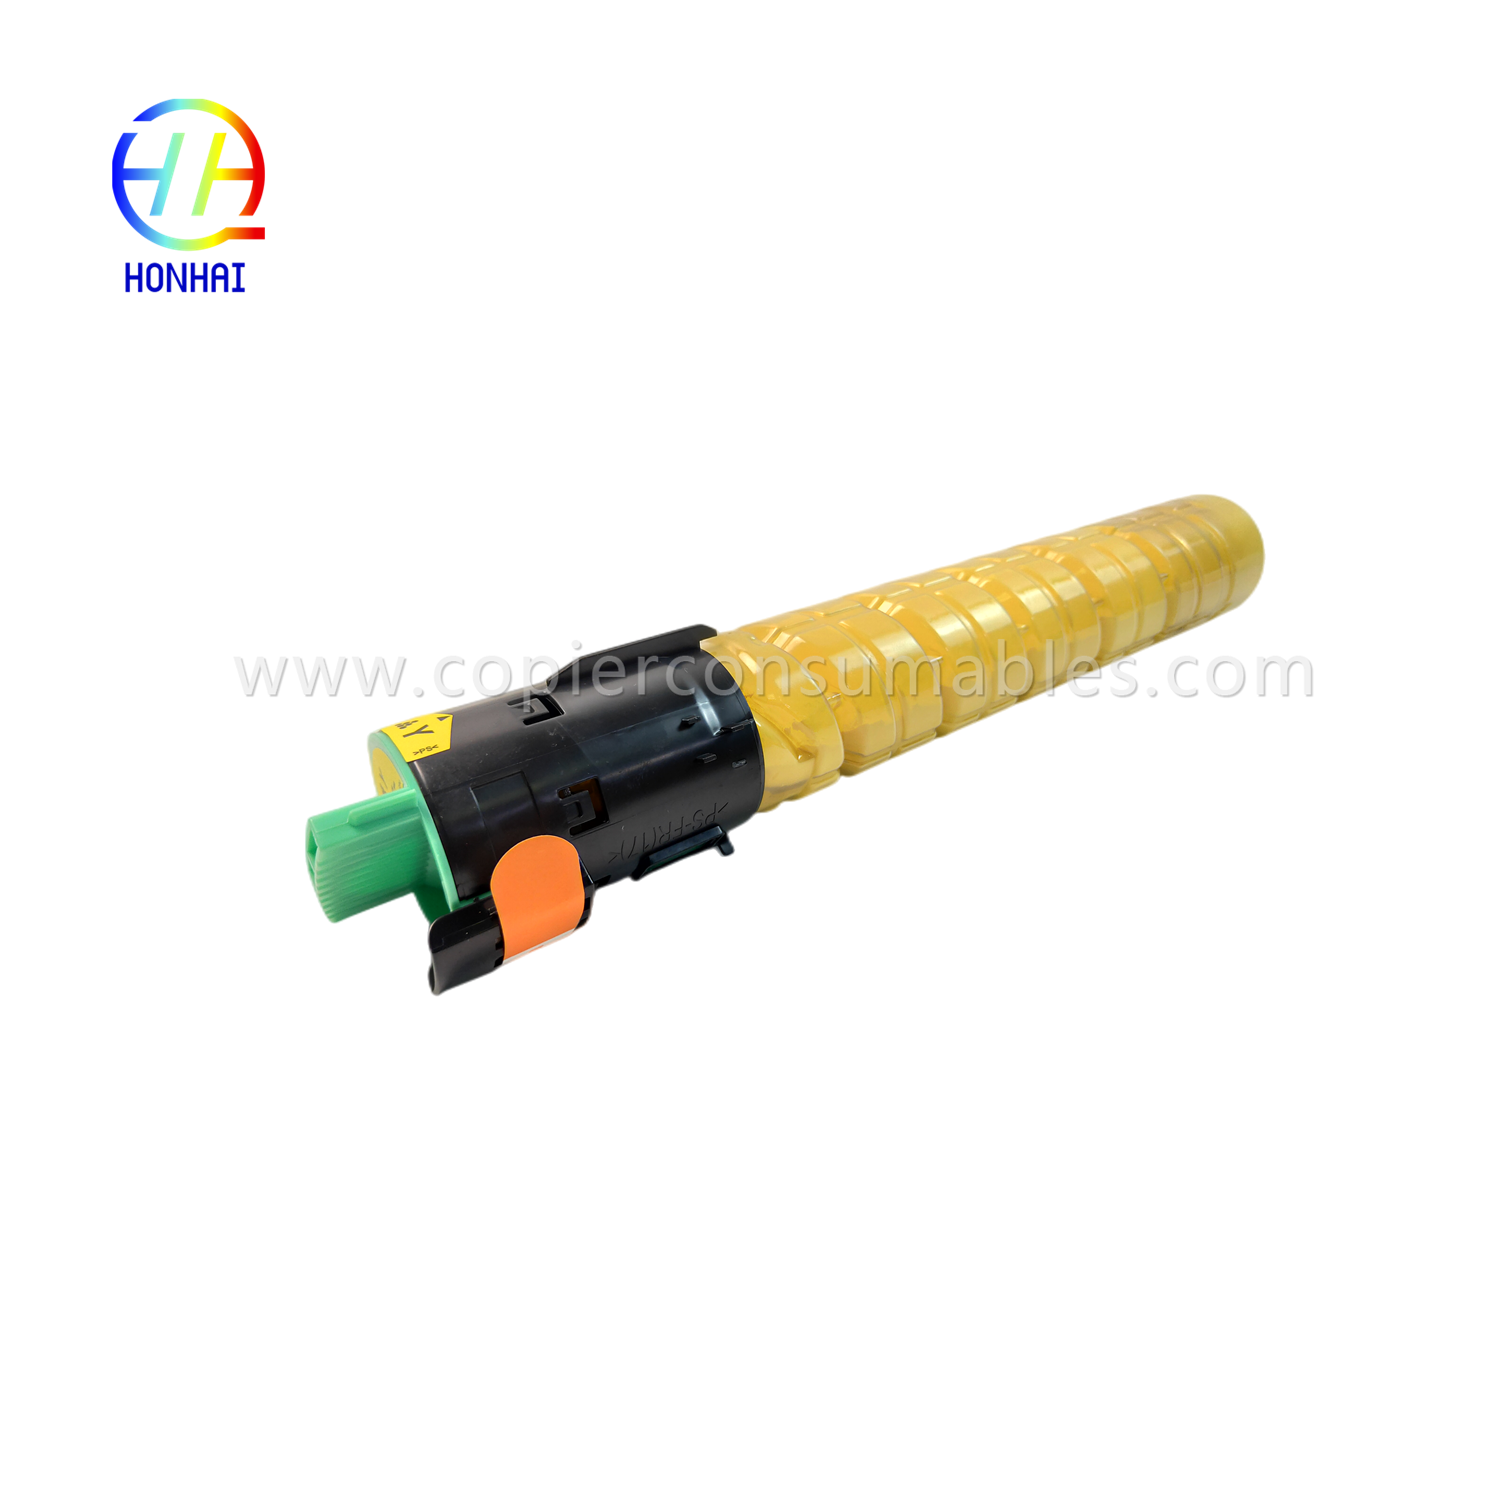 https://c585.goodao.net/toner-cartridge-kuning-for-ricoh-aficio-mpc2051-mpc2551-841501-product/